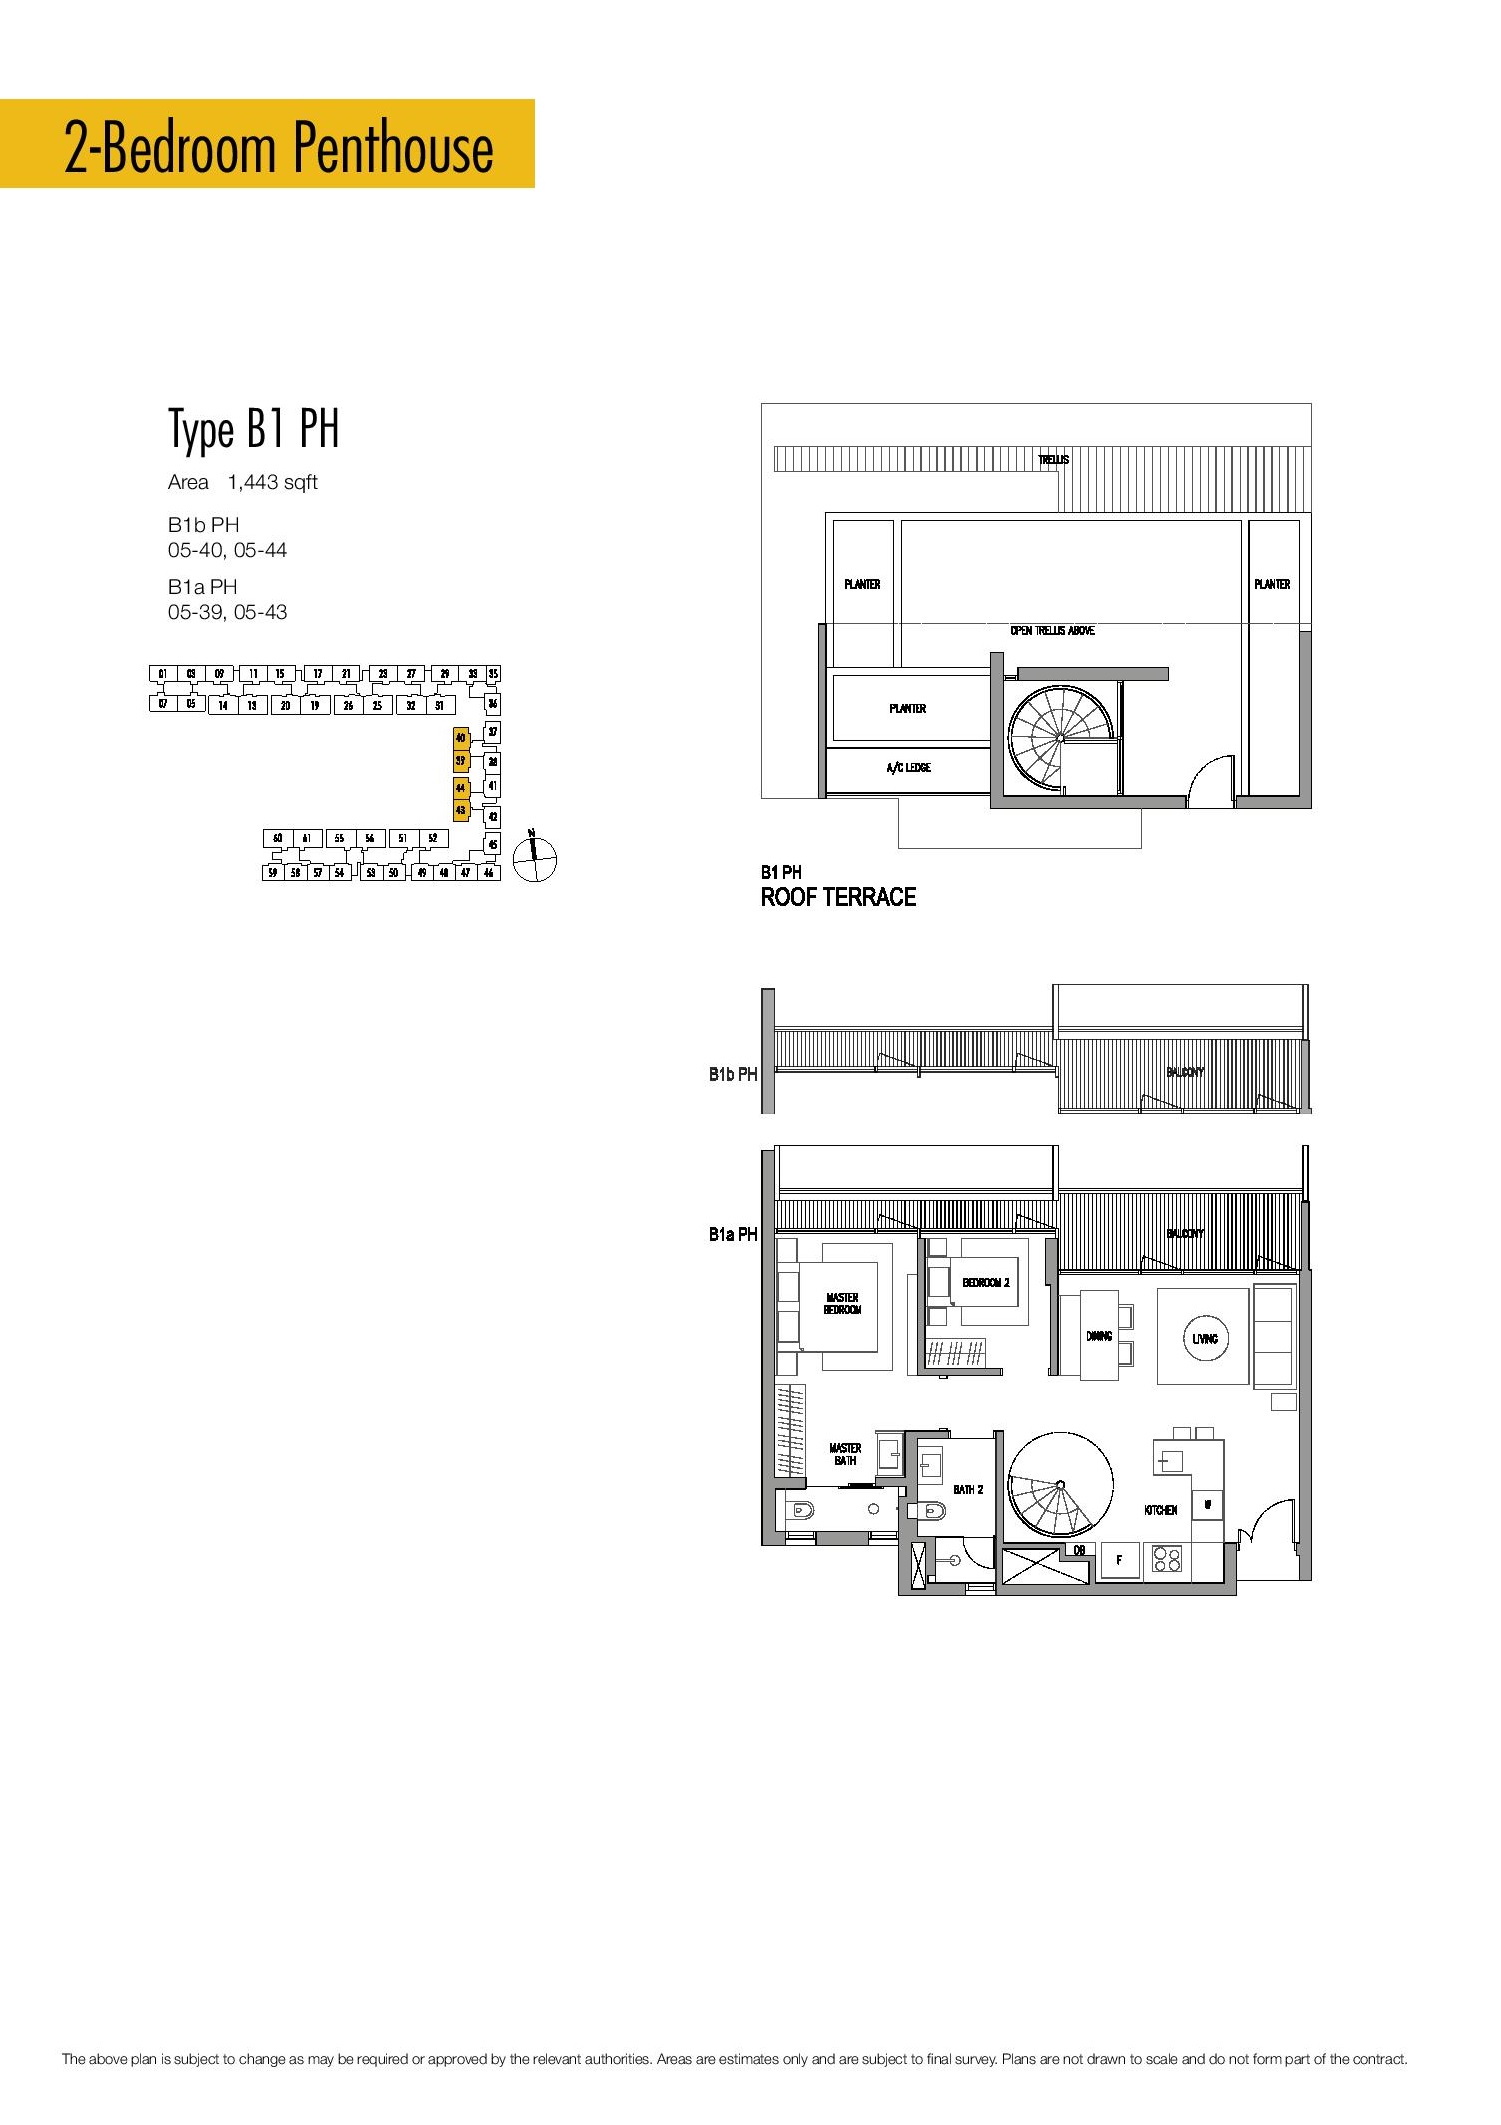 Seletar Park Residence 2 Bedroom Penthouse Type B1 PH Floor Plans